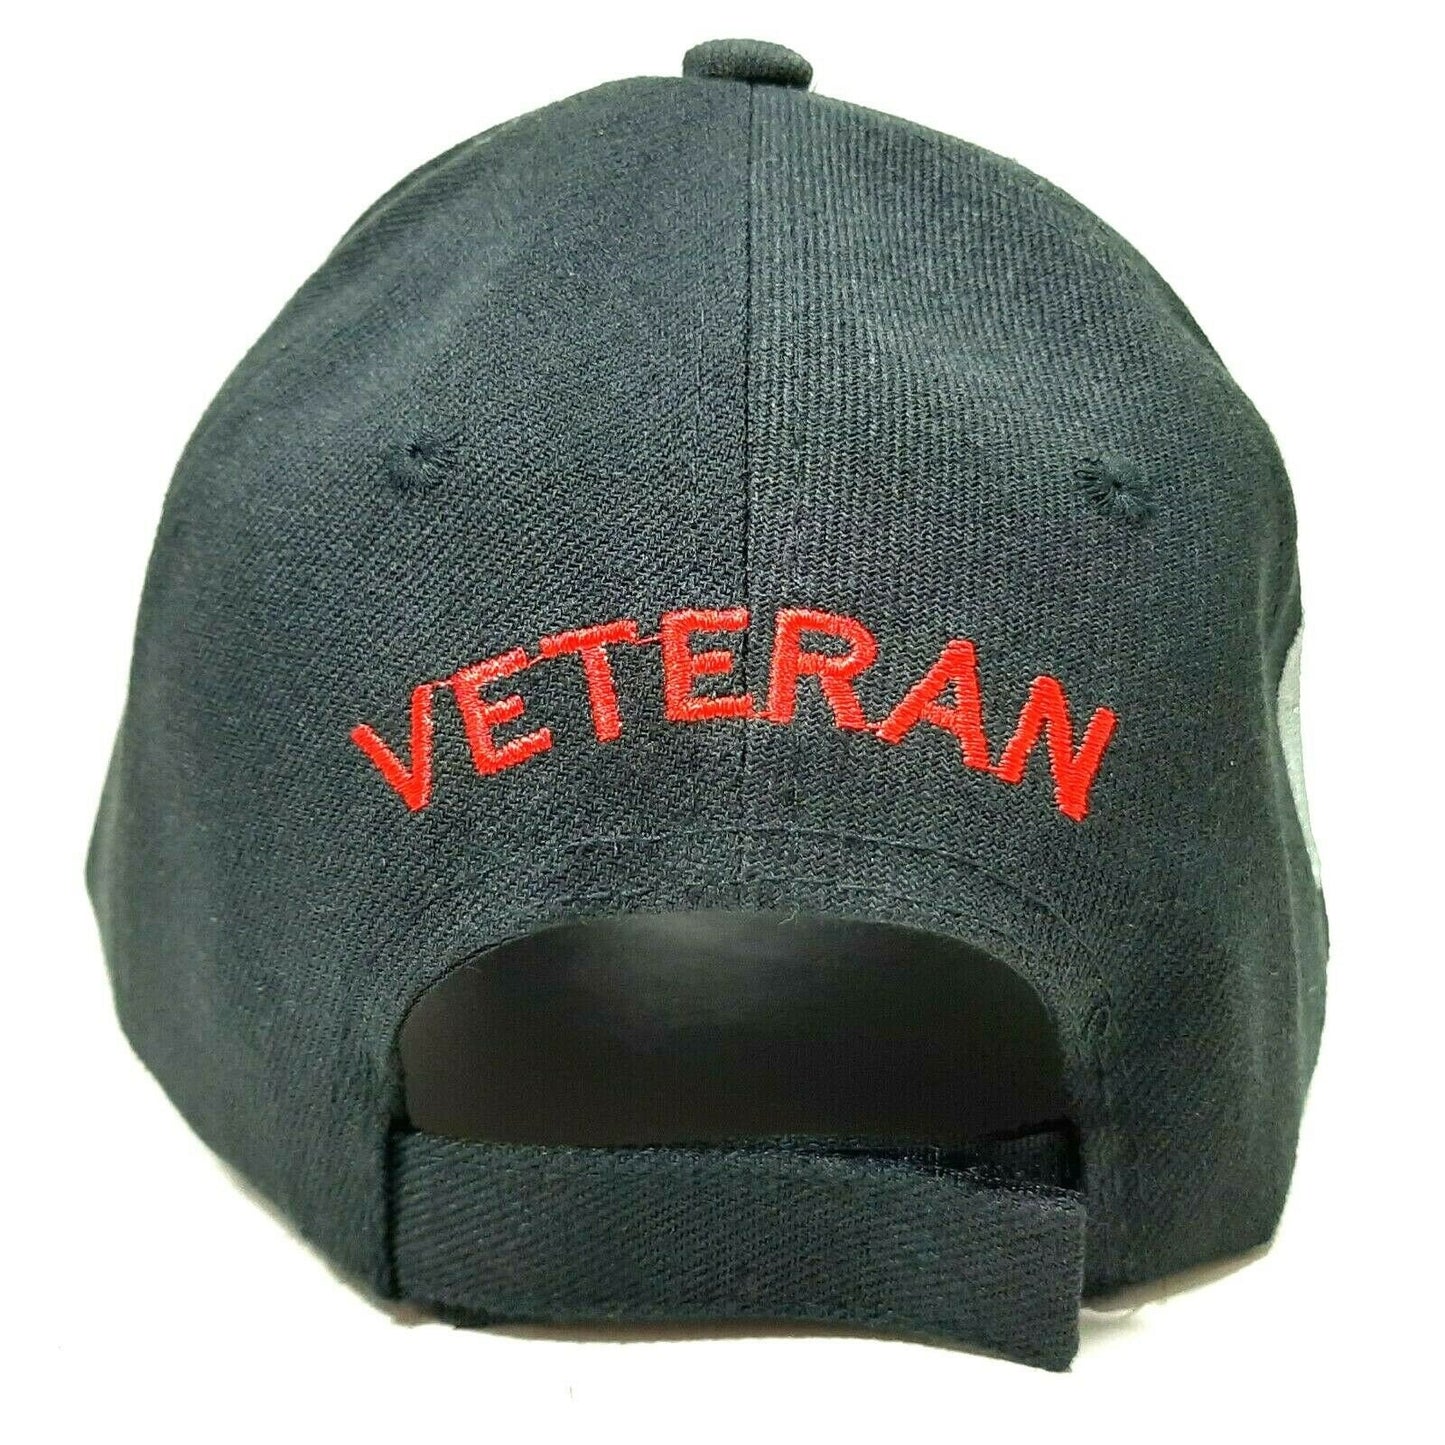 Veteran Humor Warning Embroidered Hat Cap Black Acrylic Adjustable Strap